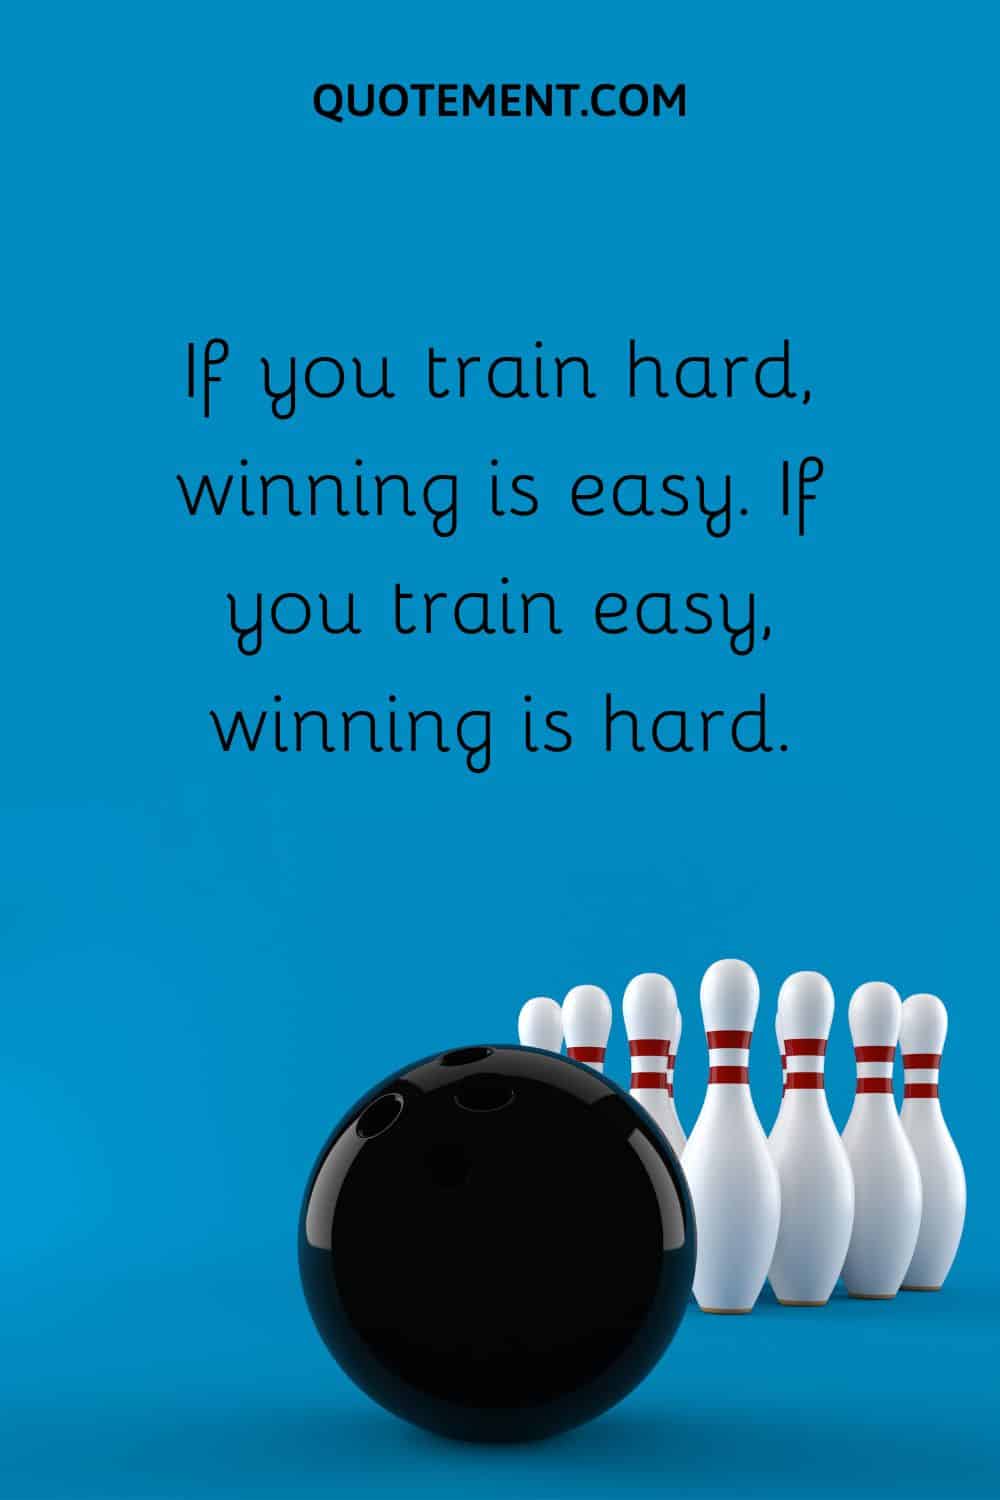 If you train hard, winning is easy. If you train easy, winning is hard